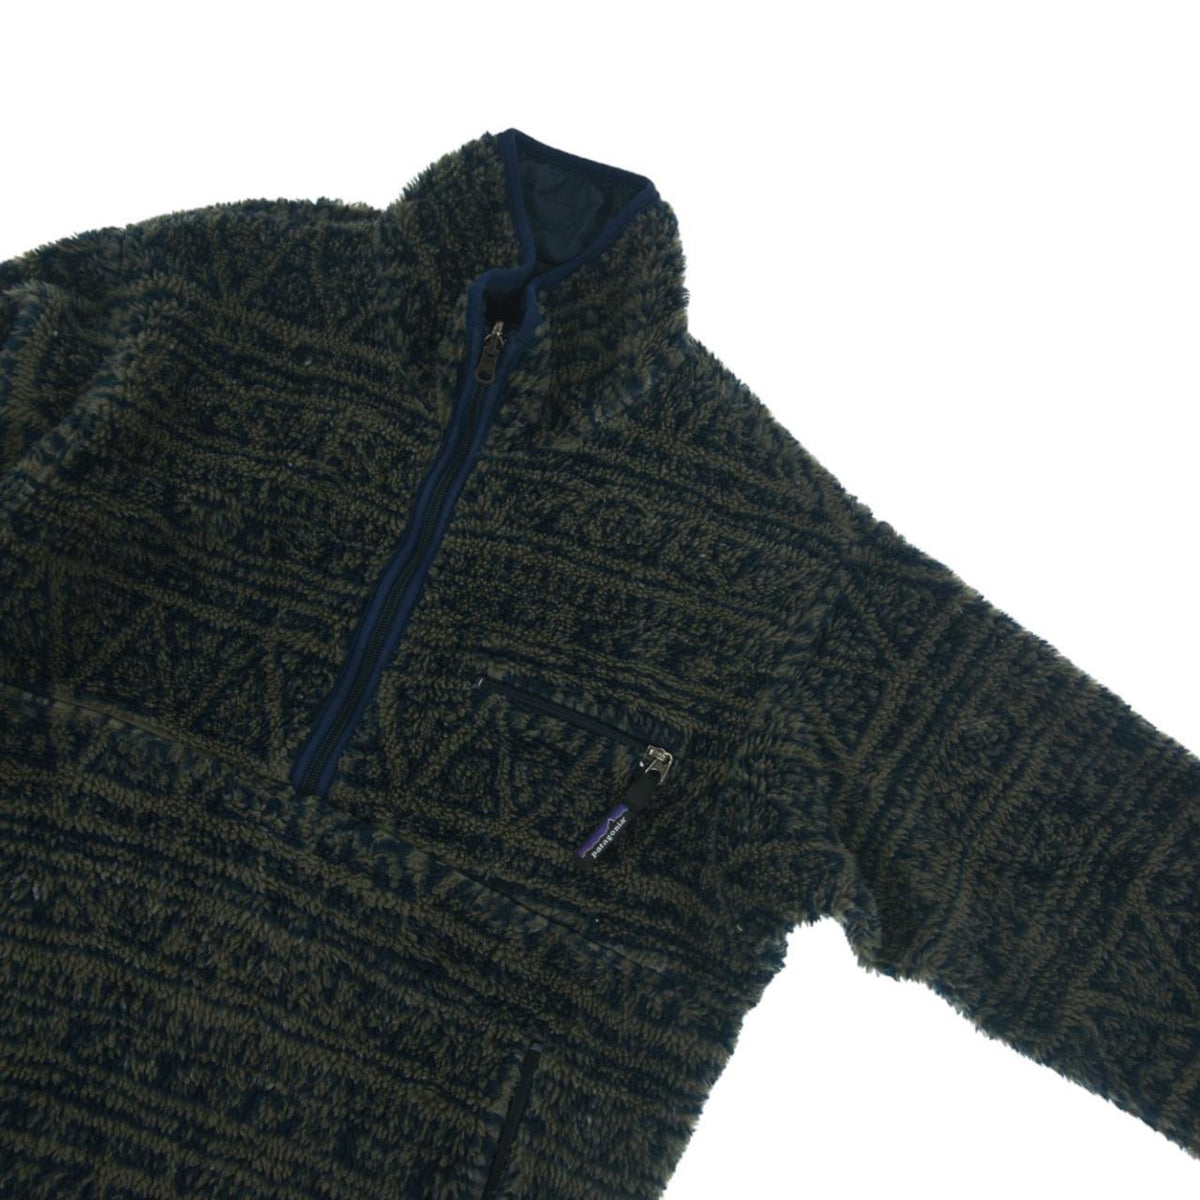 Vintage 1995 Patagonia Glissade Reversible Fleece Jumper Size M